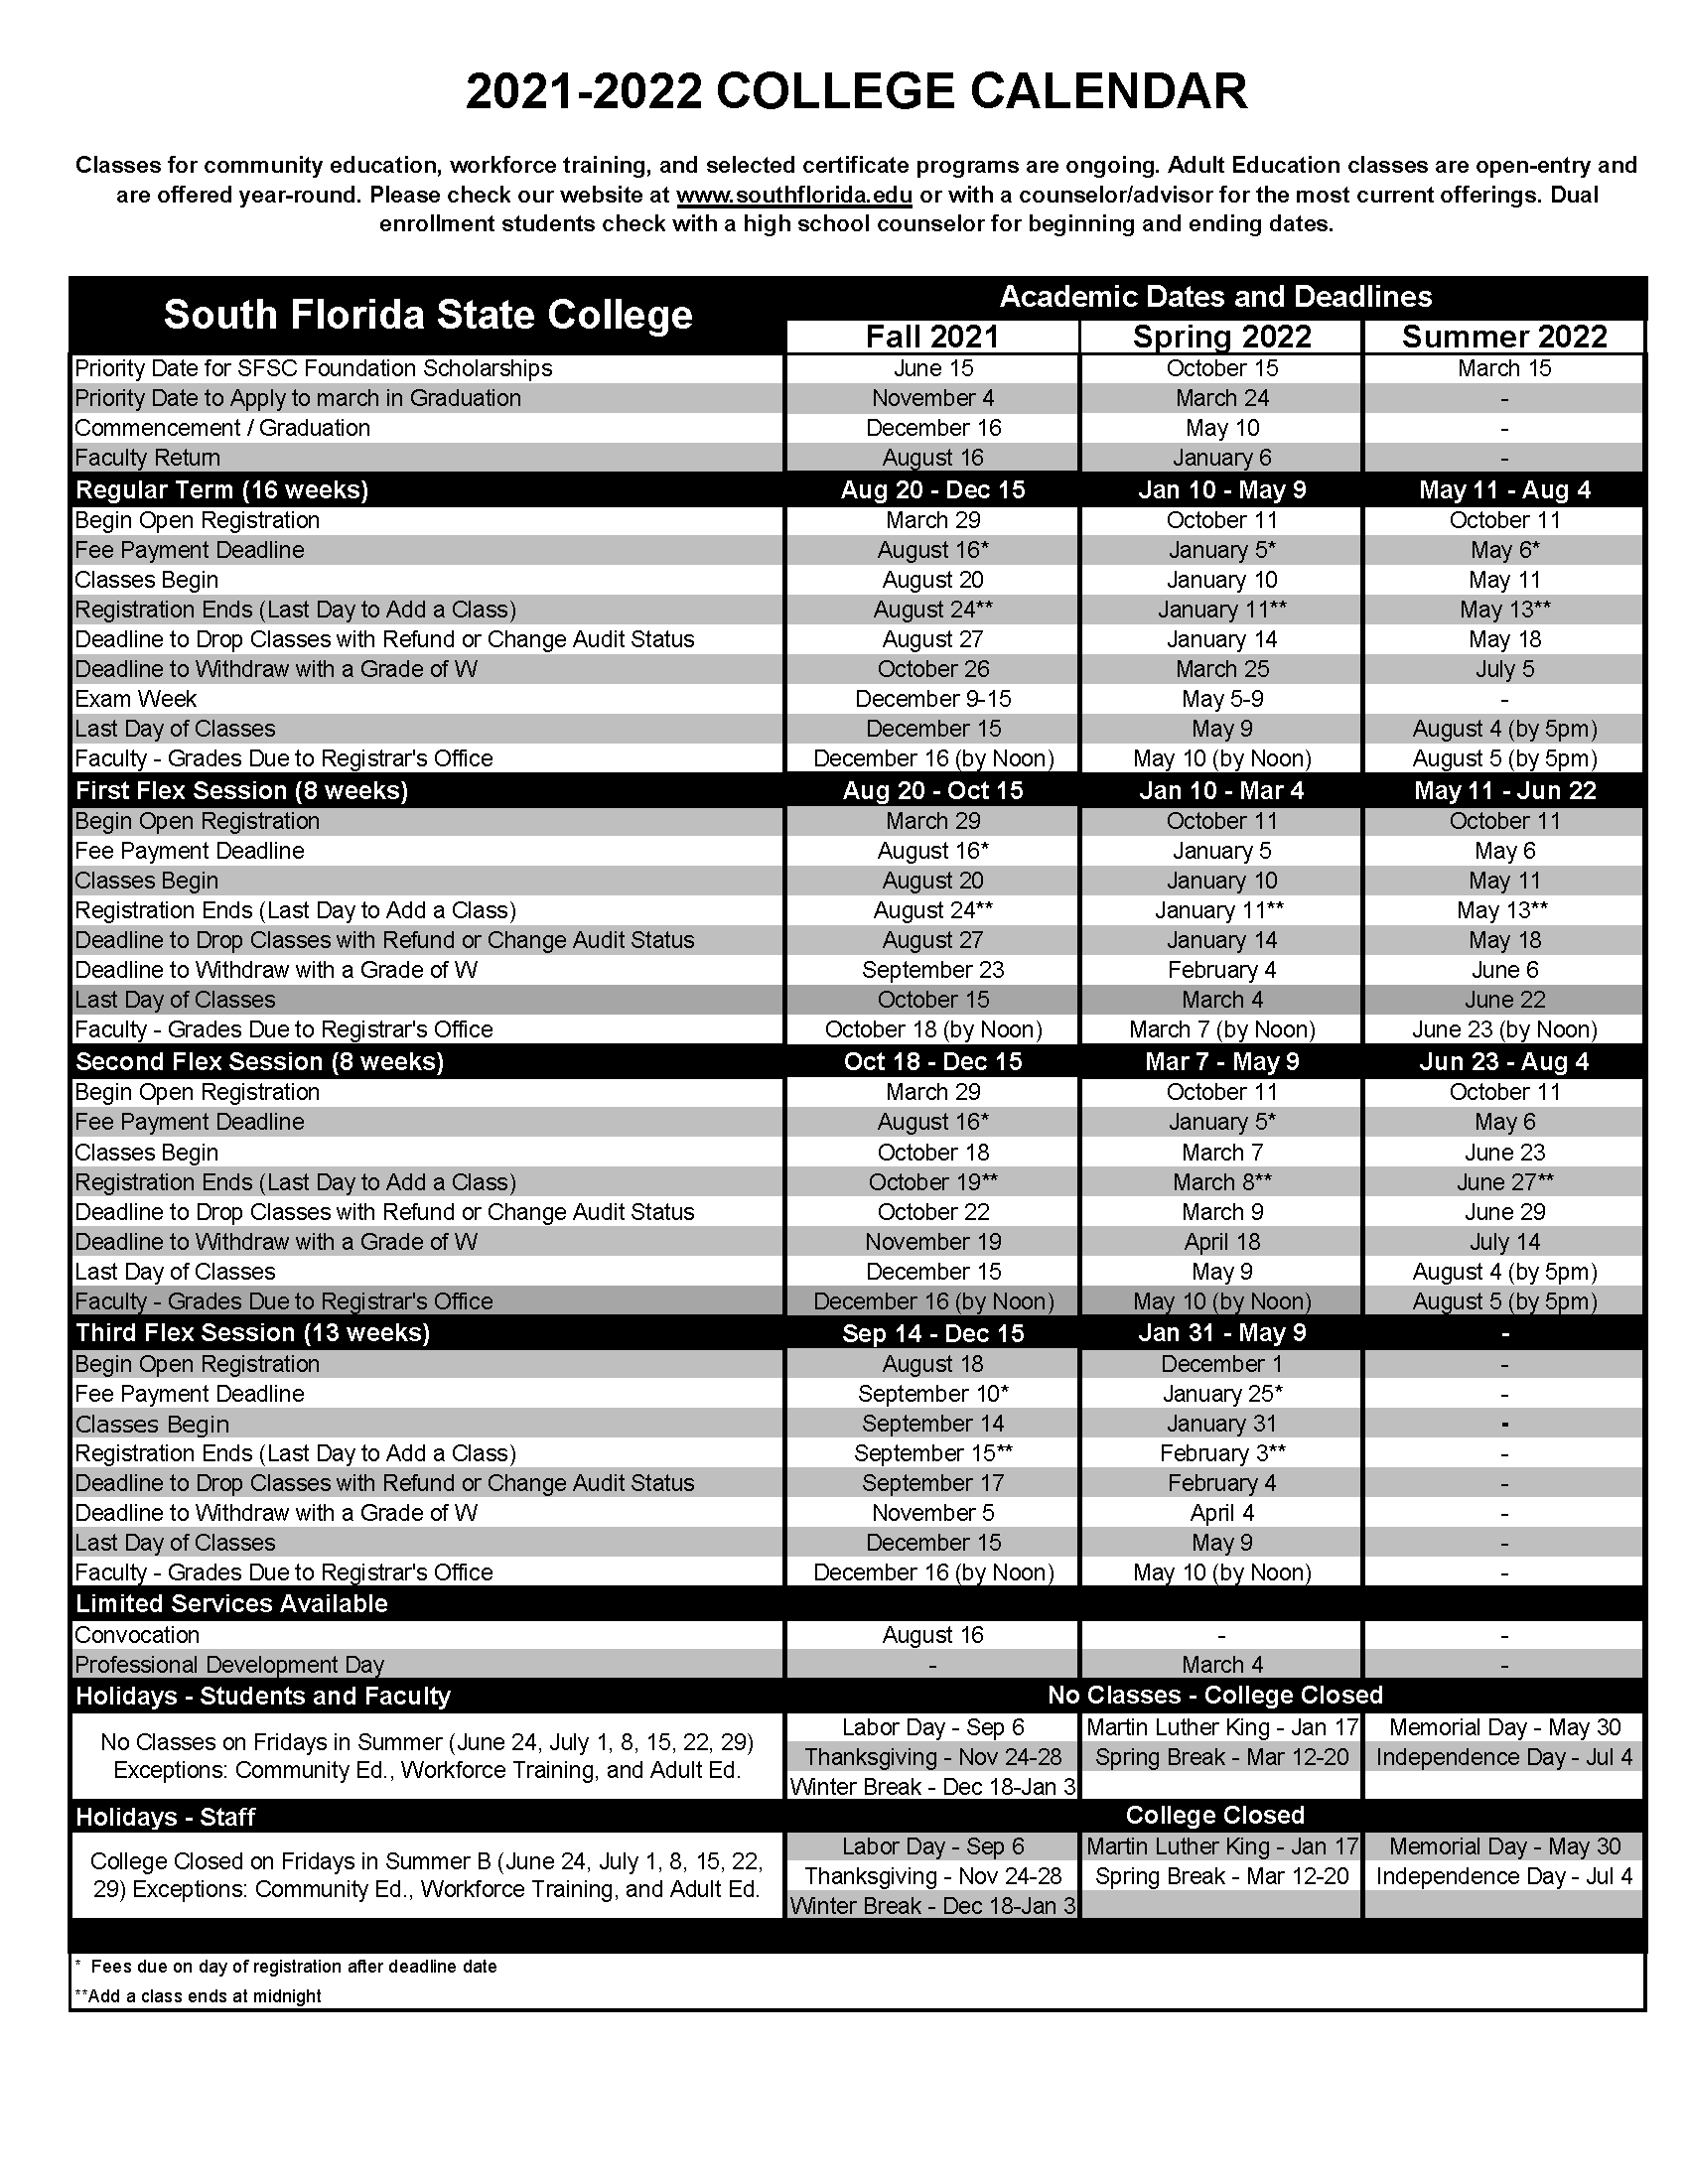 Florida State University Academic Calendar 2022 Academic Calendar 2021-2022 - College